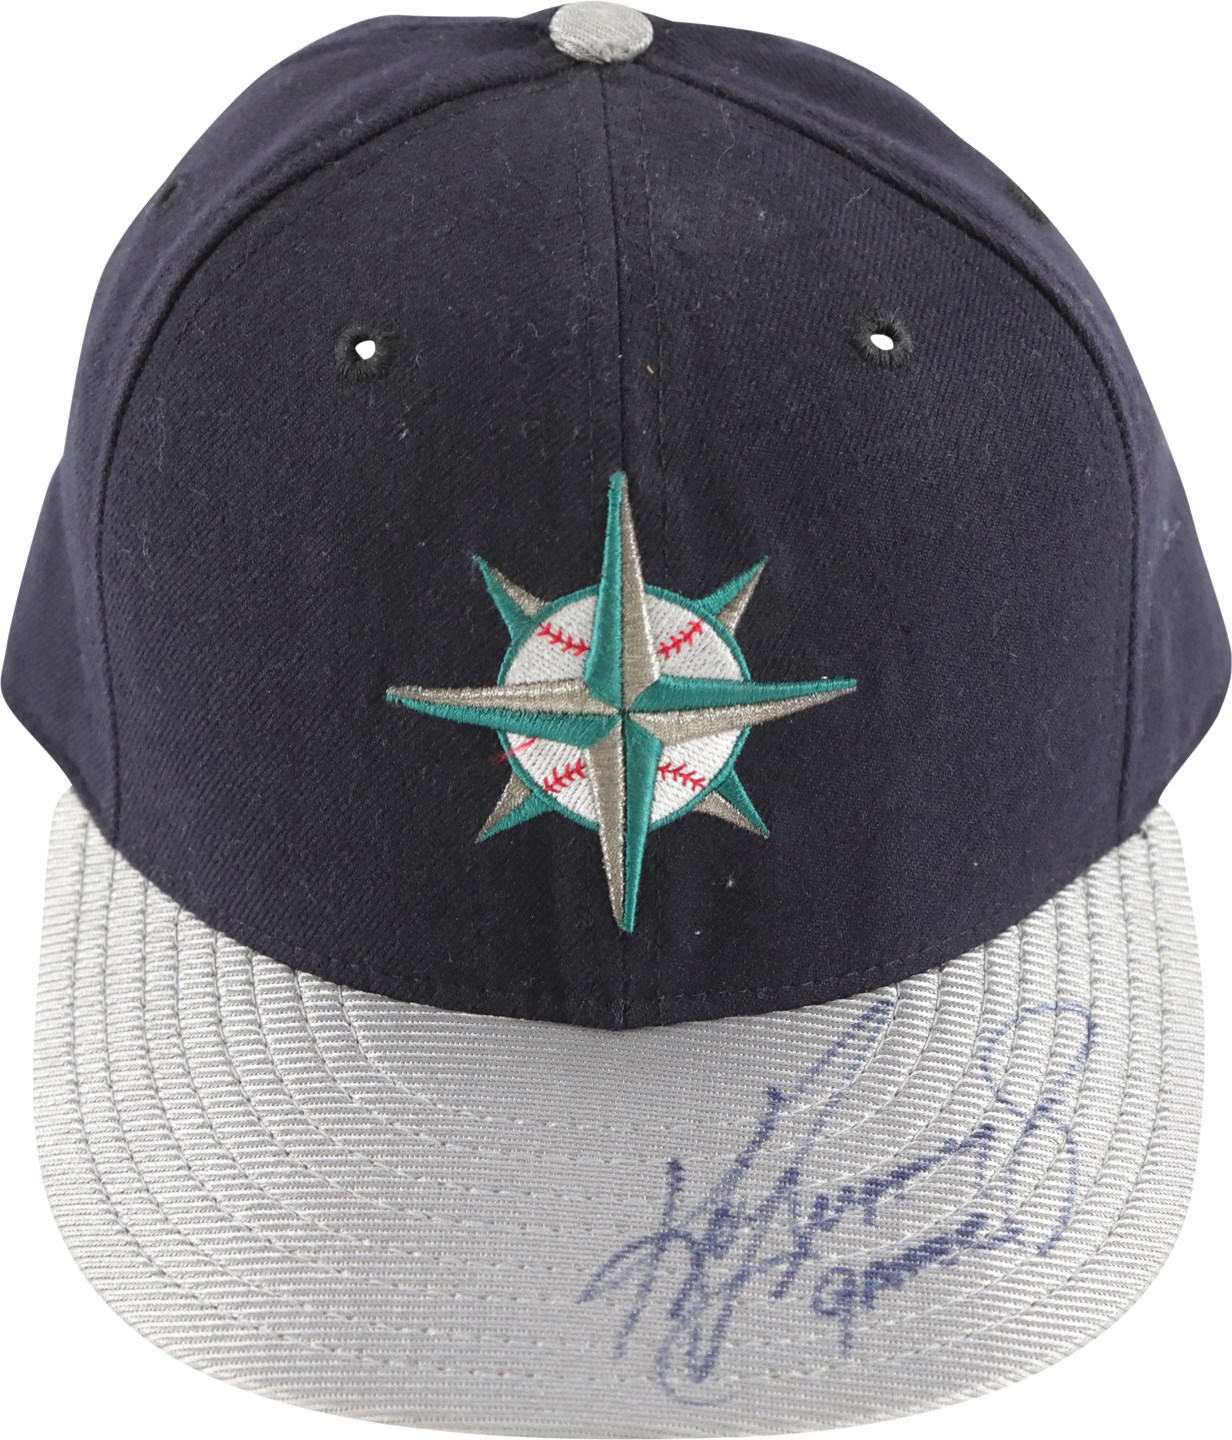 Baseball Equipment - 1997 Ken Griffey Jr. Seattle Mariners MVP Season Signed & Inscribed Game Used Hat (Griffey Jr. COA)